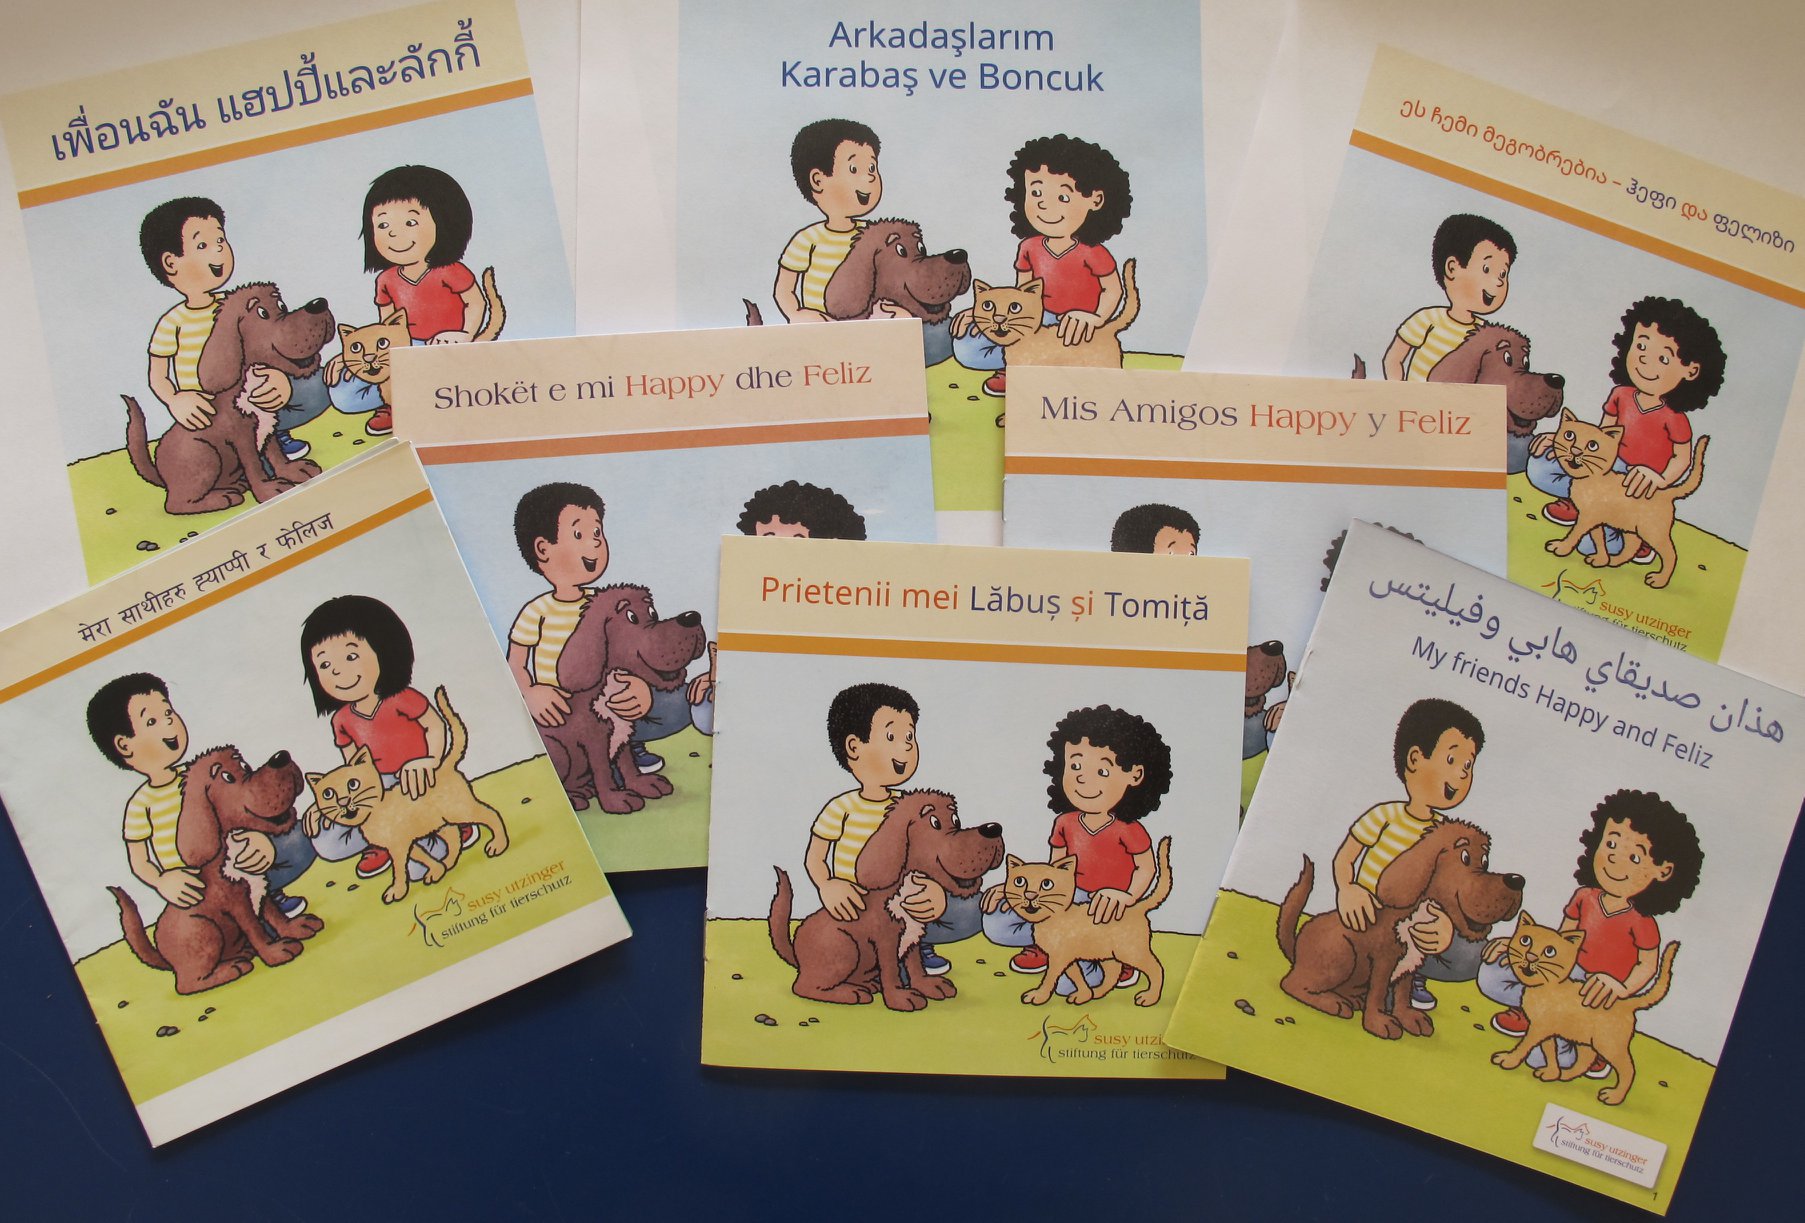 Today is International Children's Book Day